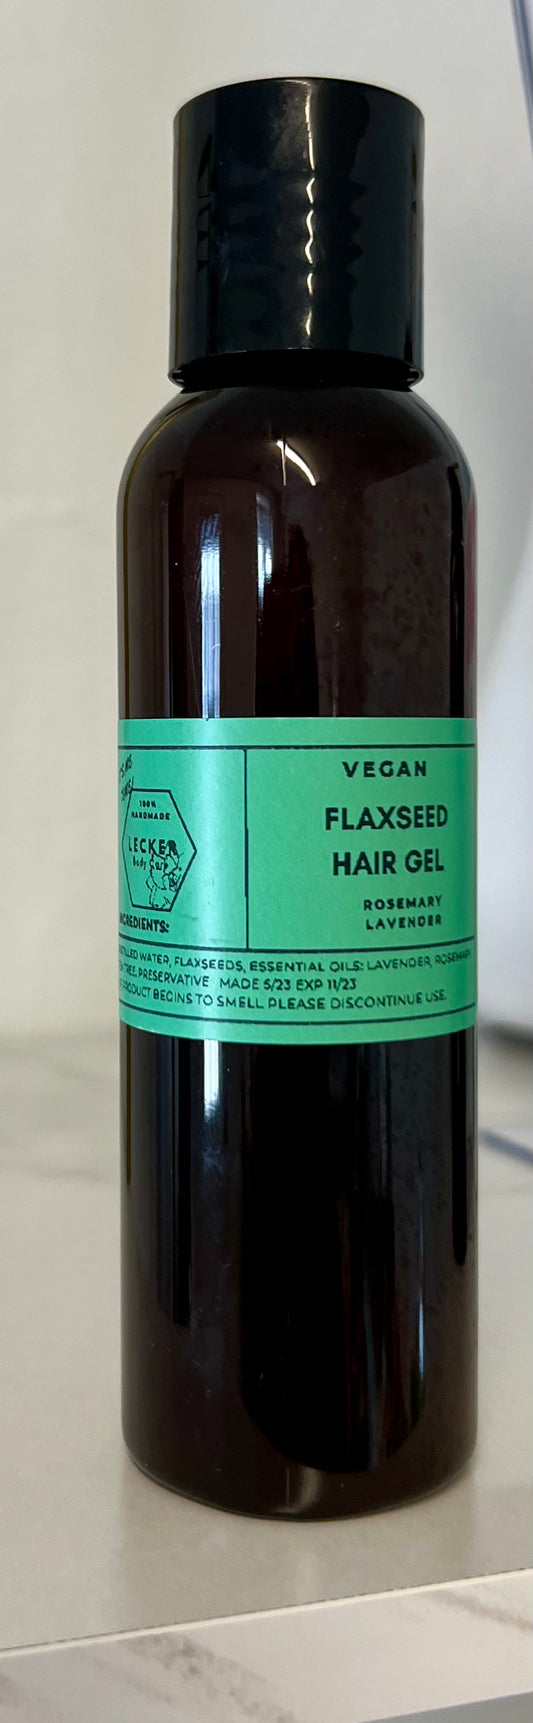 Flaxseed Hair gel- Curly Natural Hair